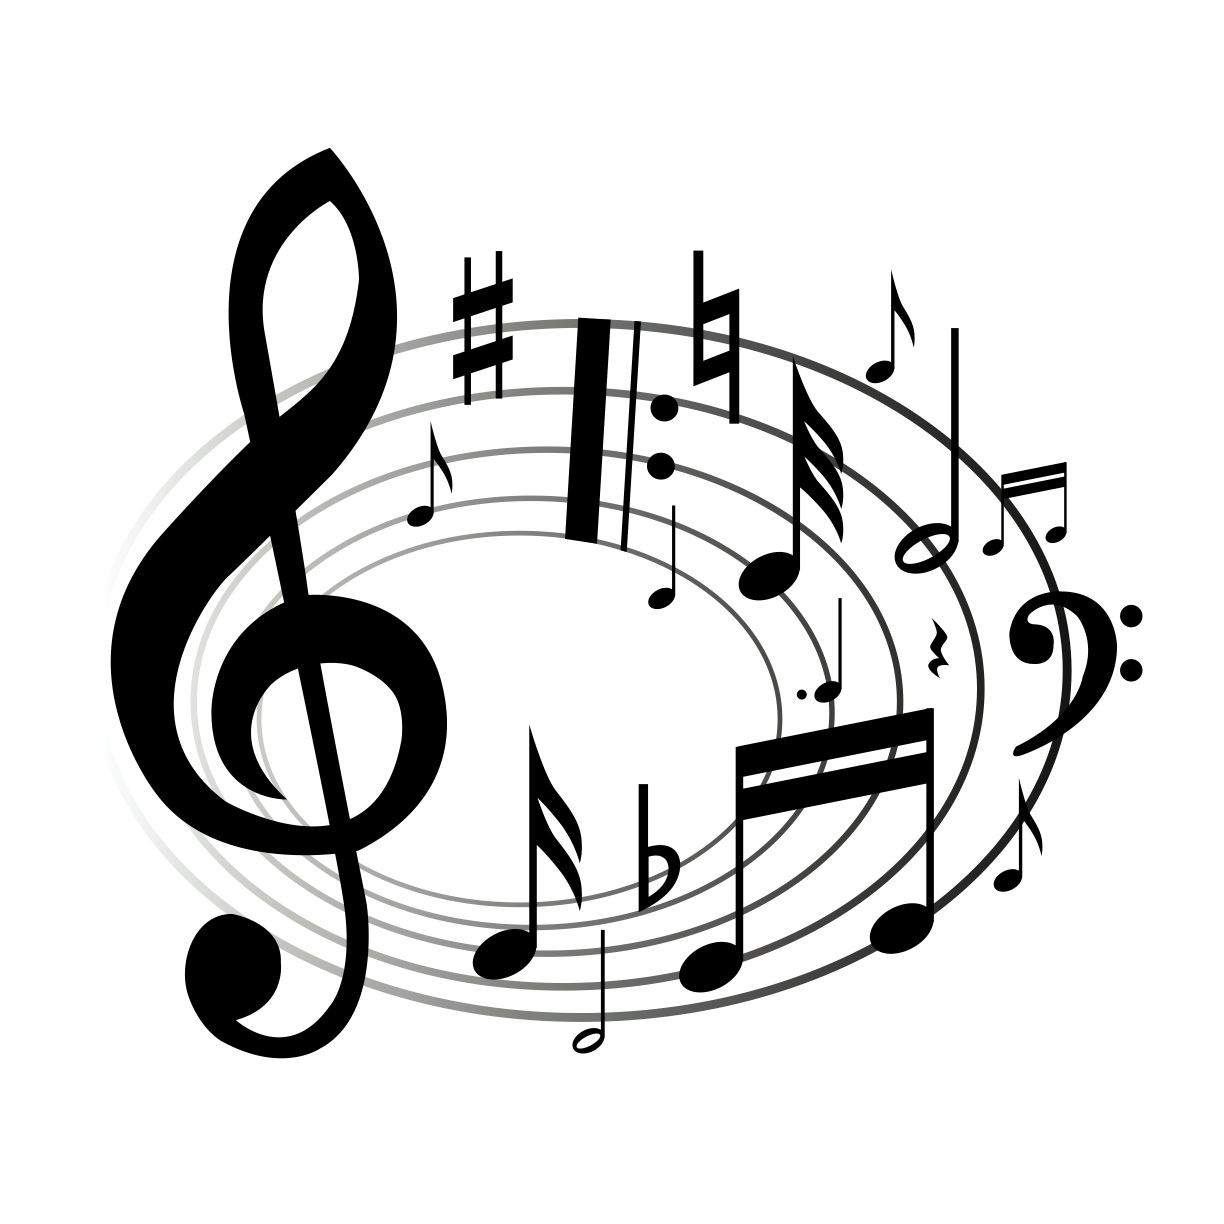 Musical Notes Symbols Clip Ar